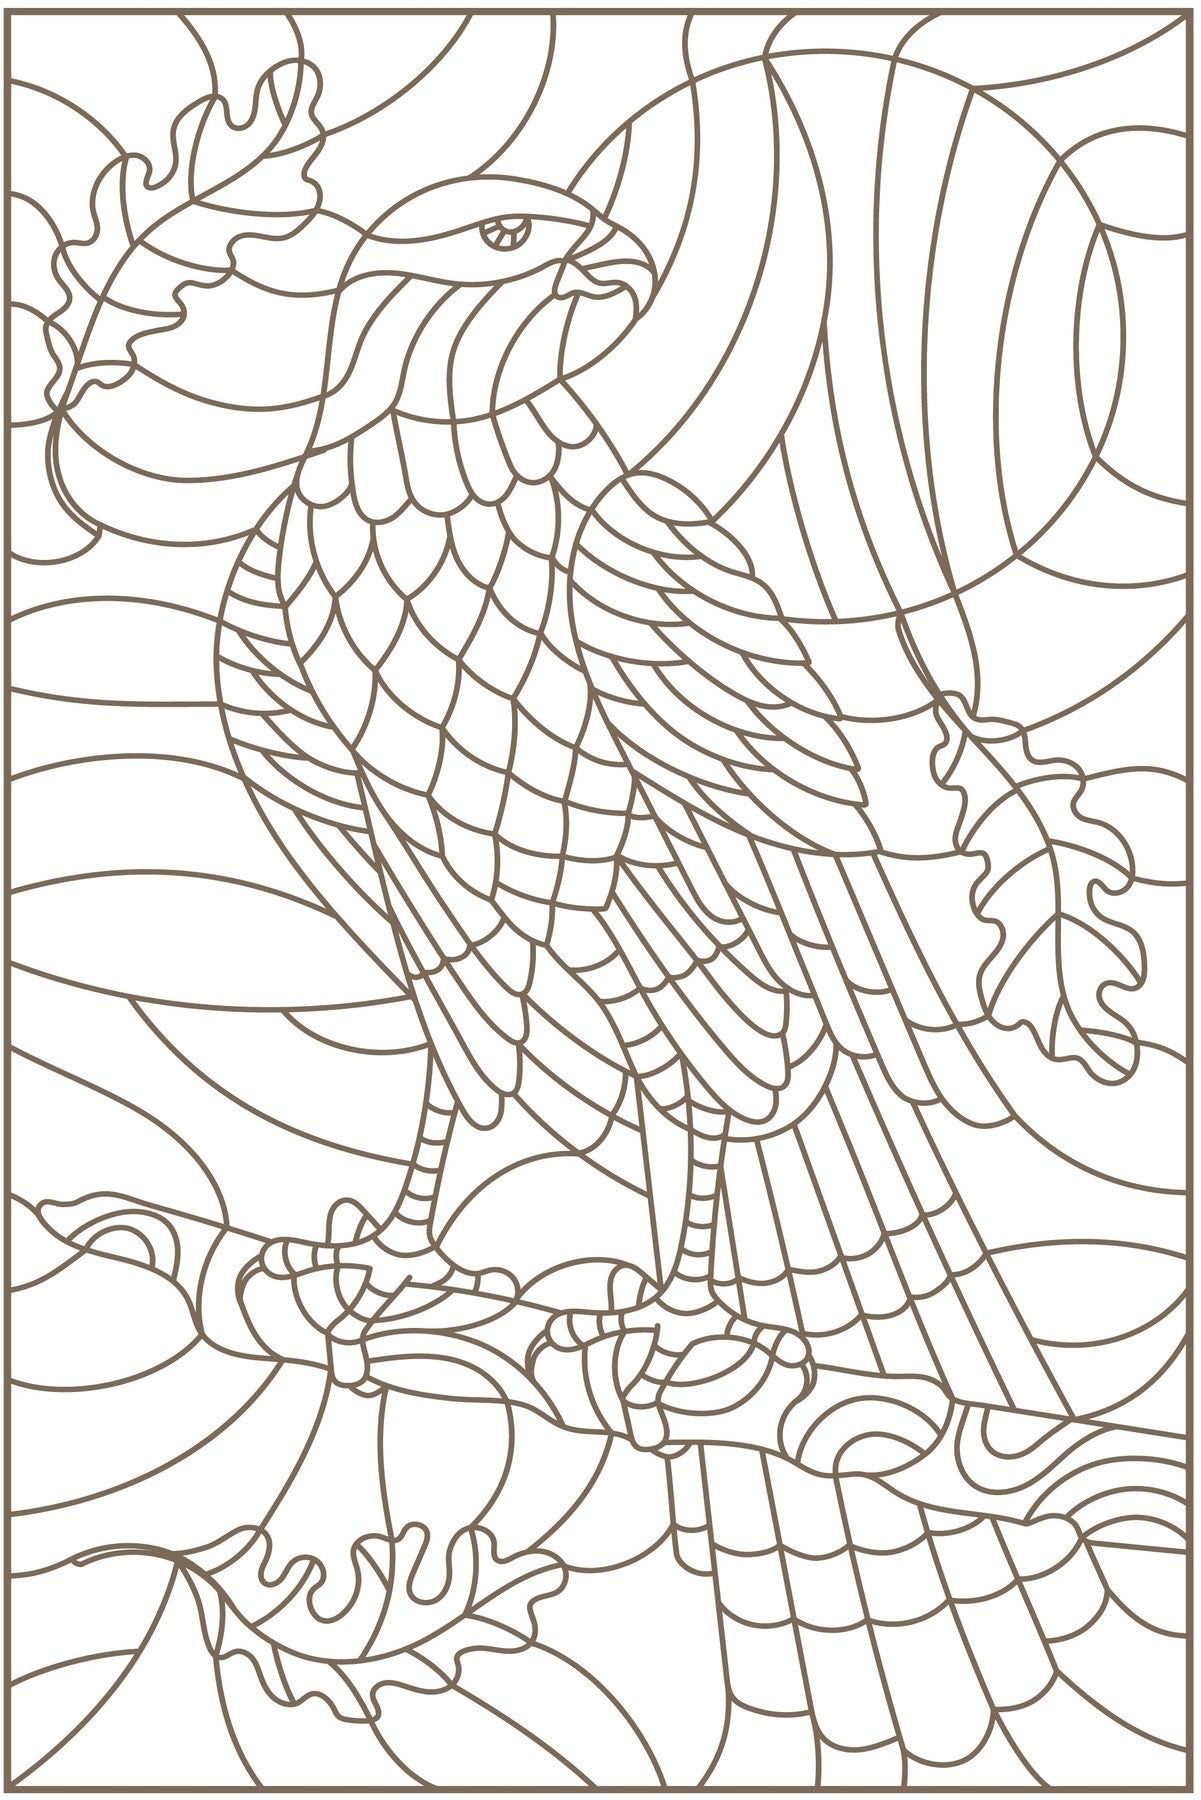 Birds Kingdom - Stained Glass Art Patterns of Beautiful Parrots, Peacock, Hummingbird, Owls - PDF Book